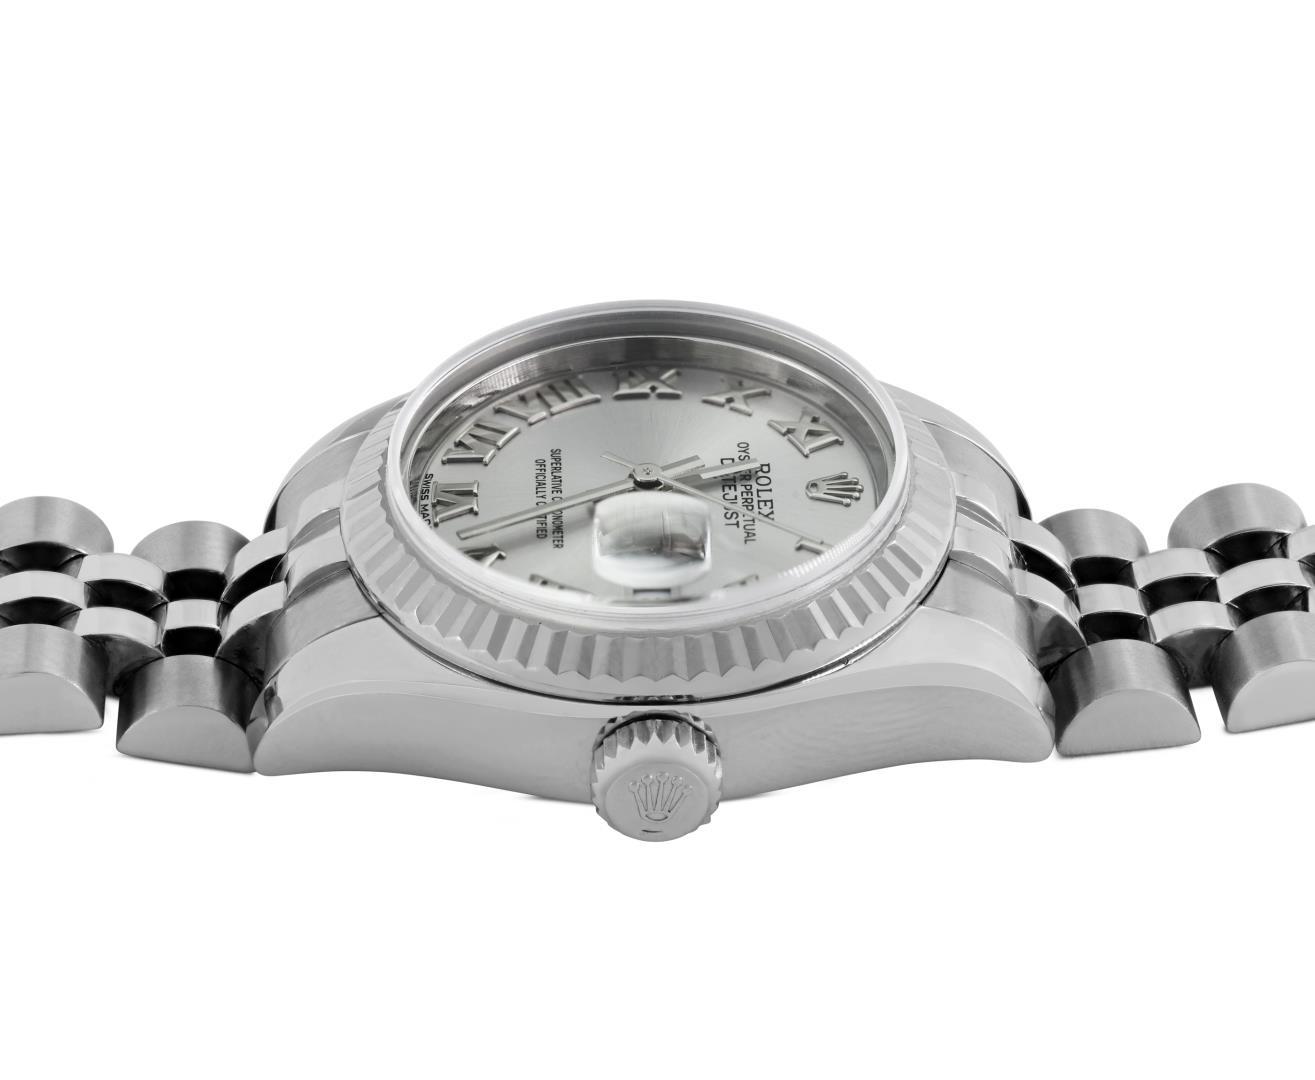 Rolex Ladies Stainless Steel Silver Roman Datejust Wristwatch With Rolex Box